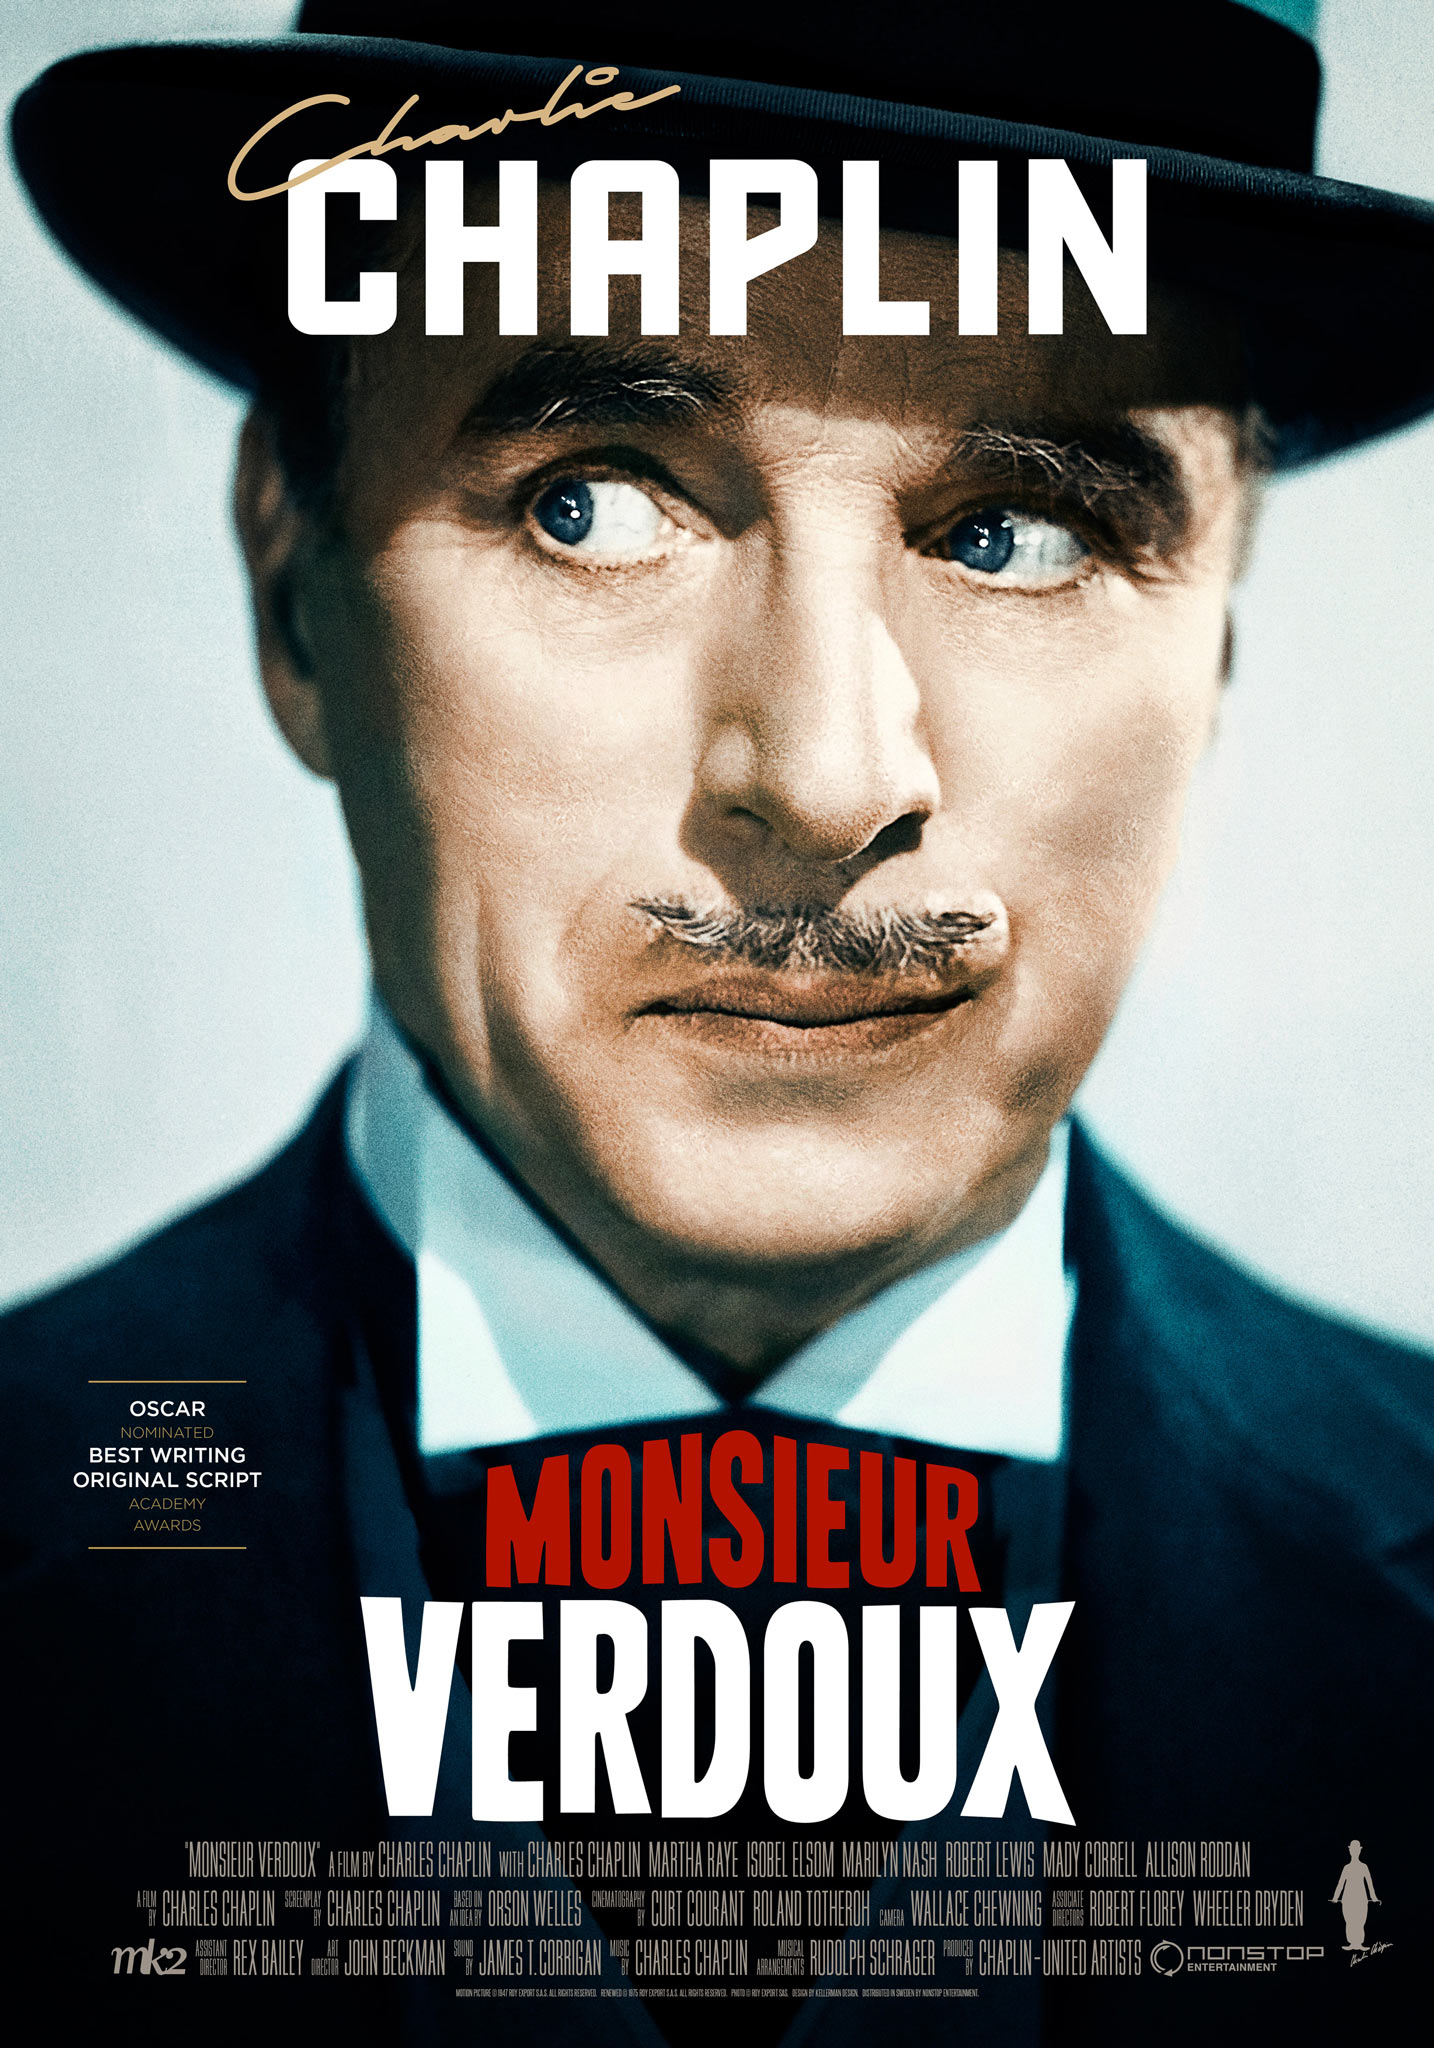 Monsieur Verdoux (1947) theatrical onesheet